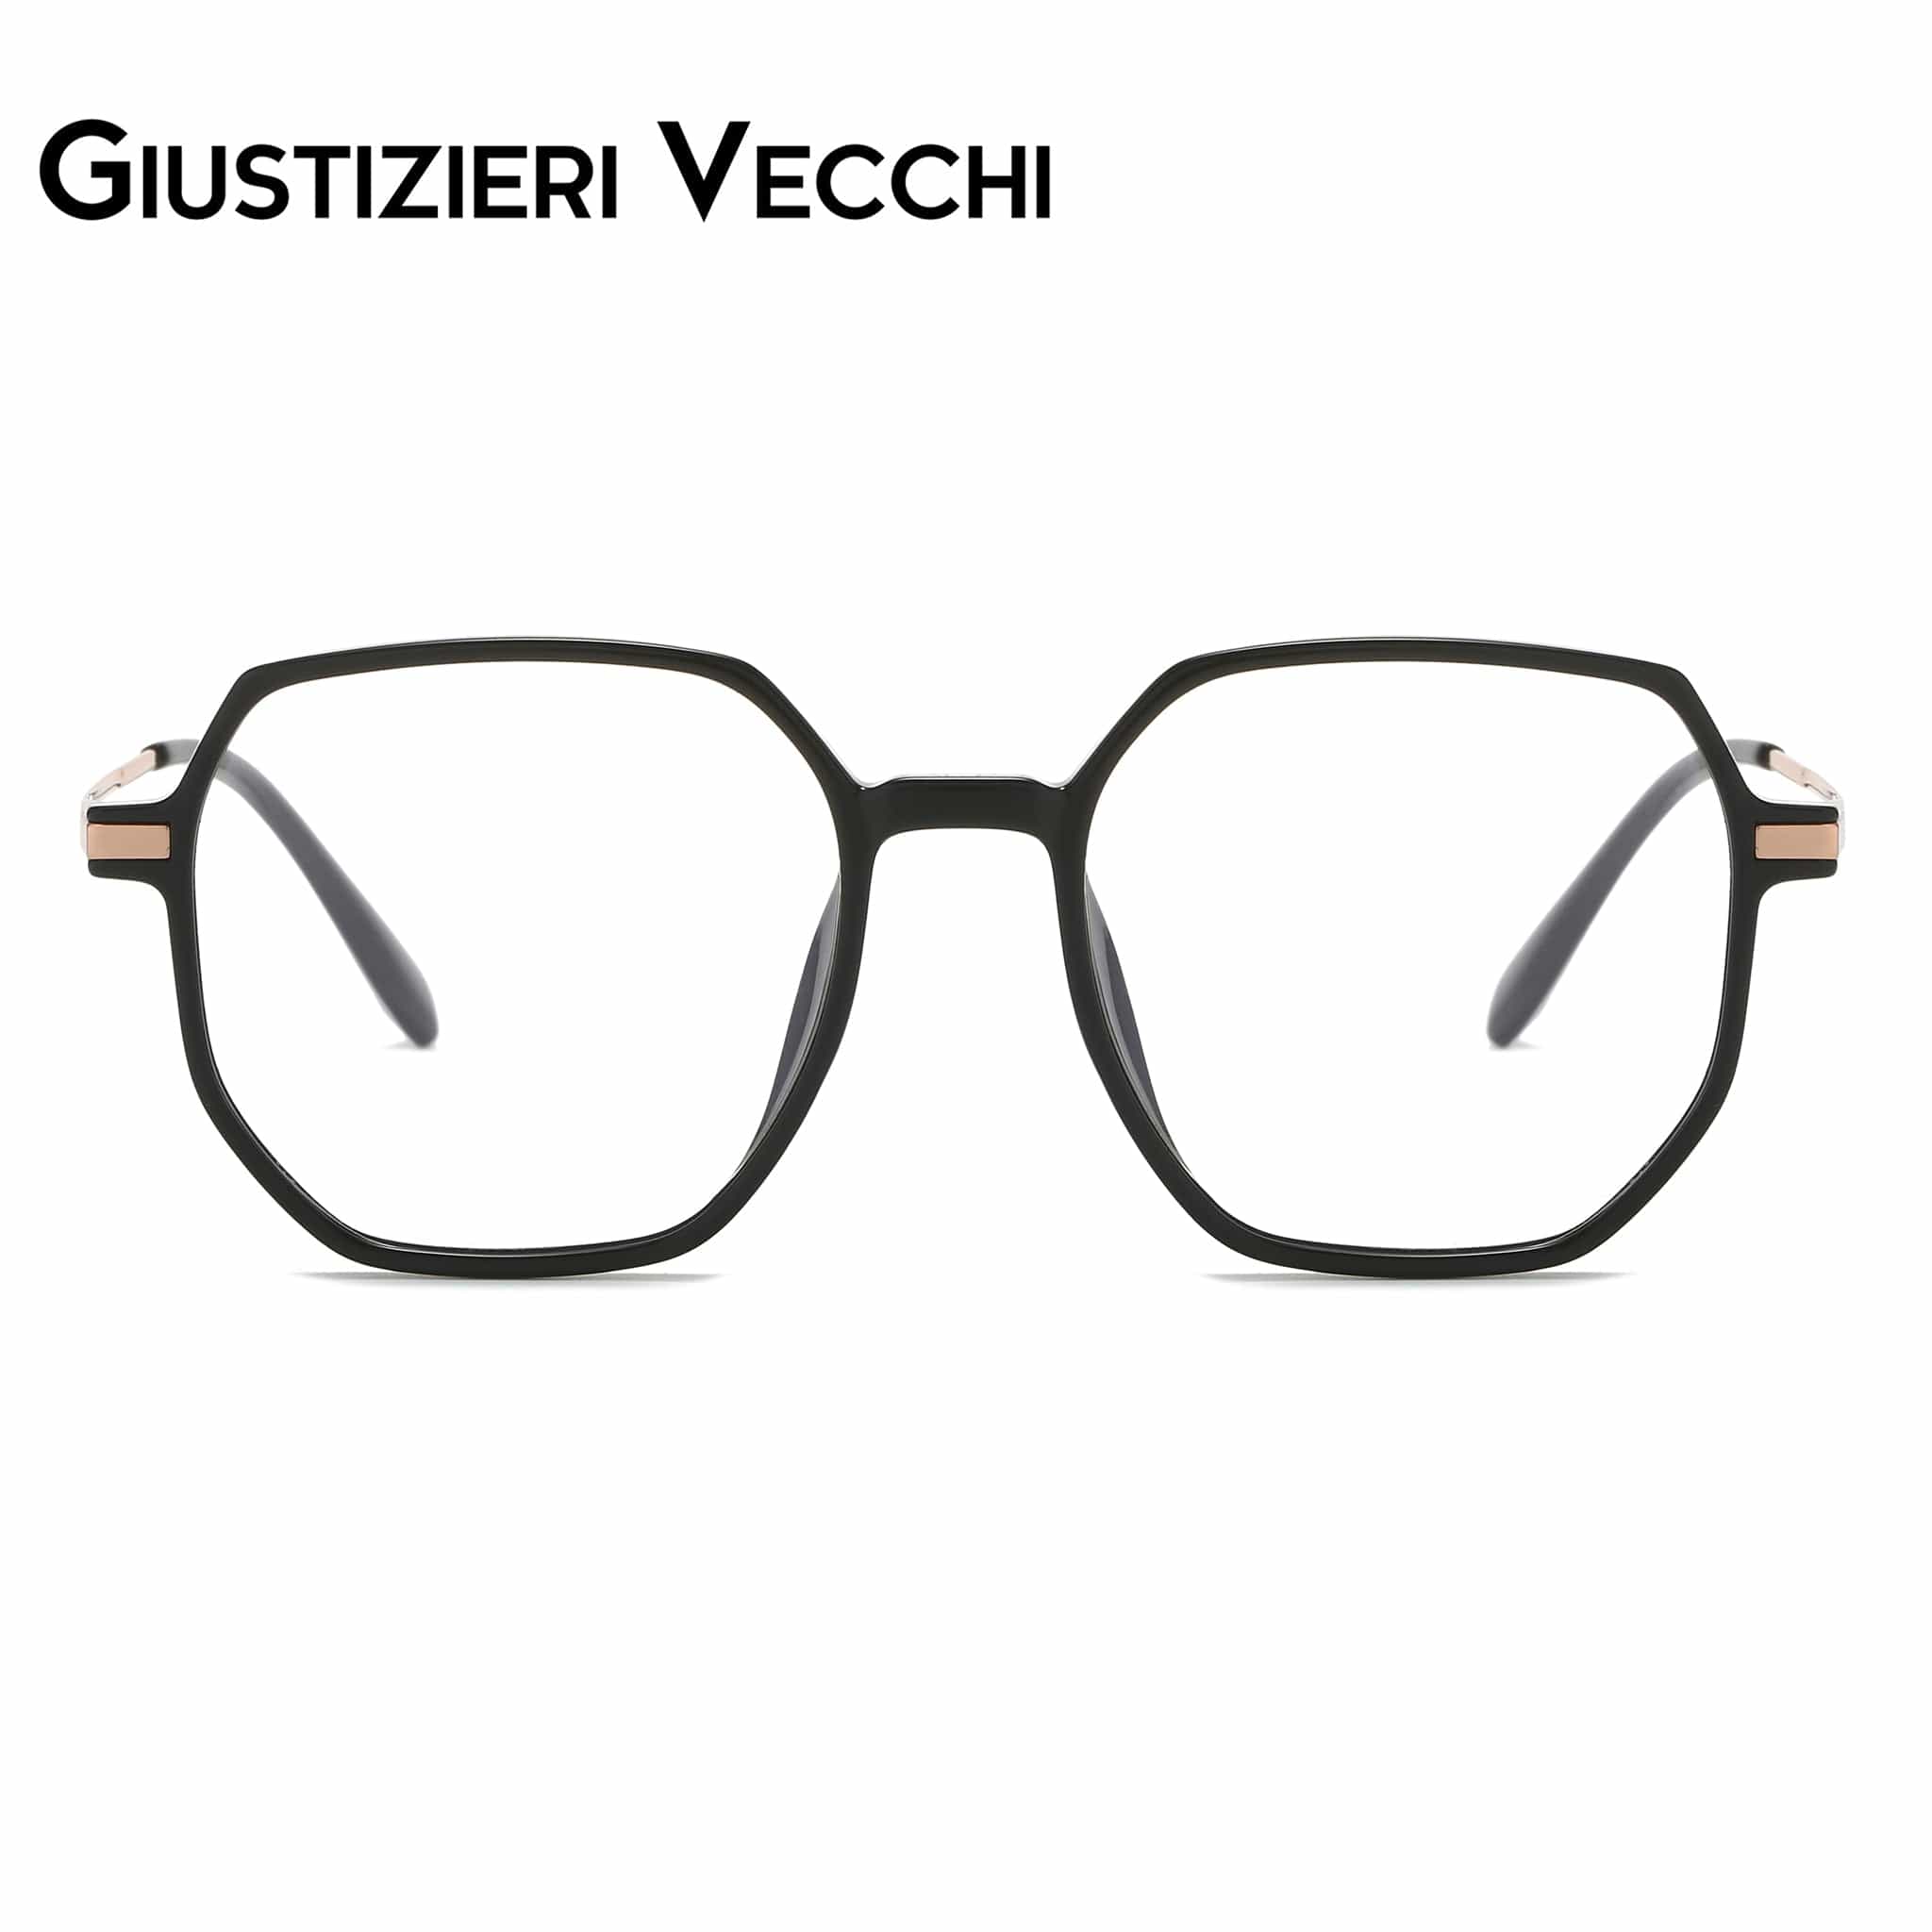 GIUSTIZIERI VECCHI Eyeglasses Medium / Black with Rose Gold Desert Oasis